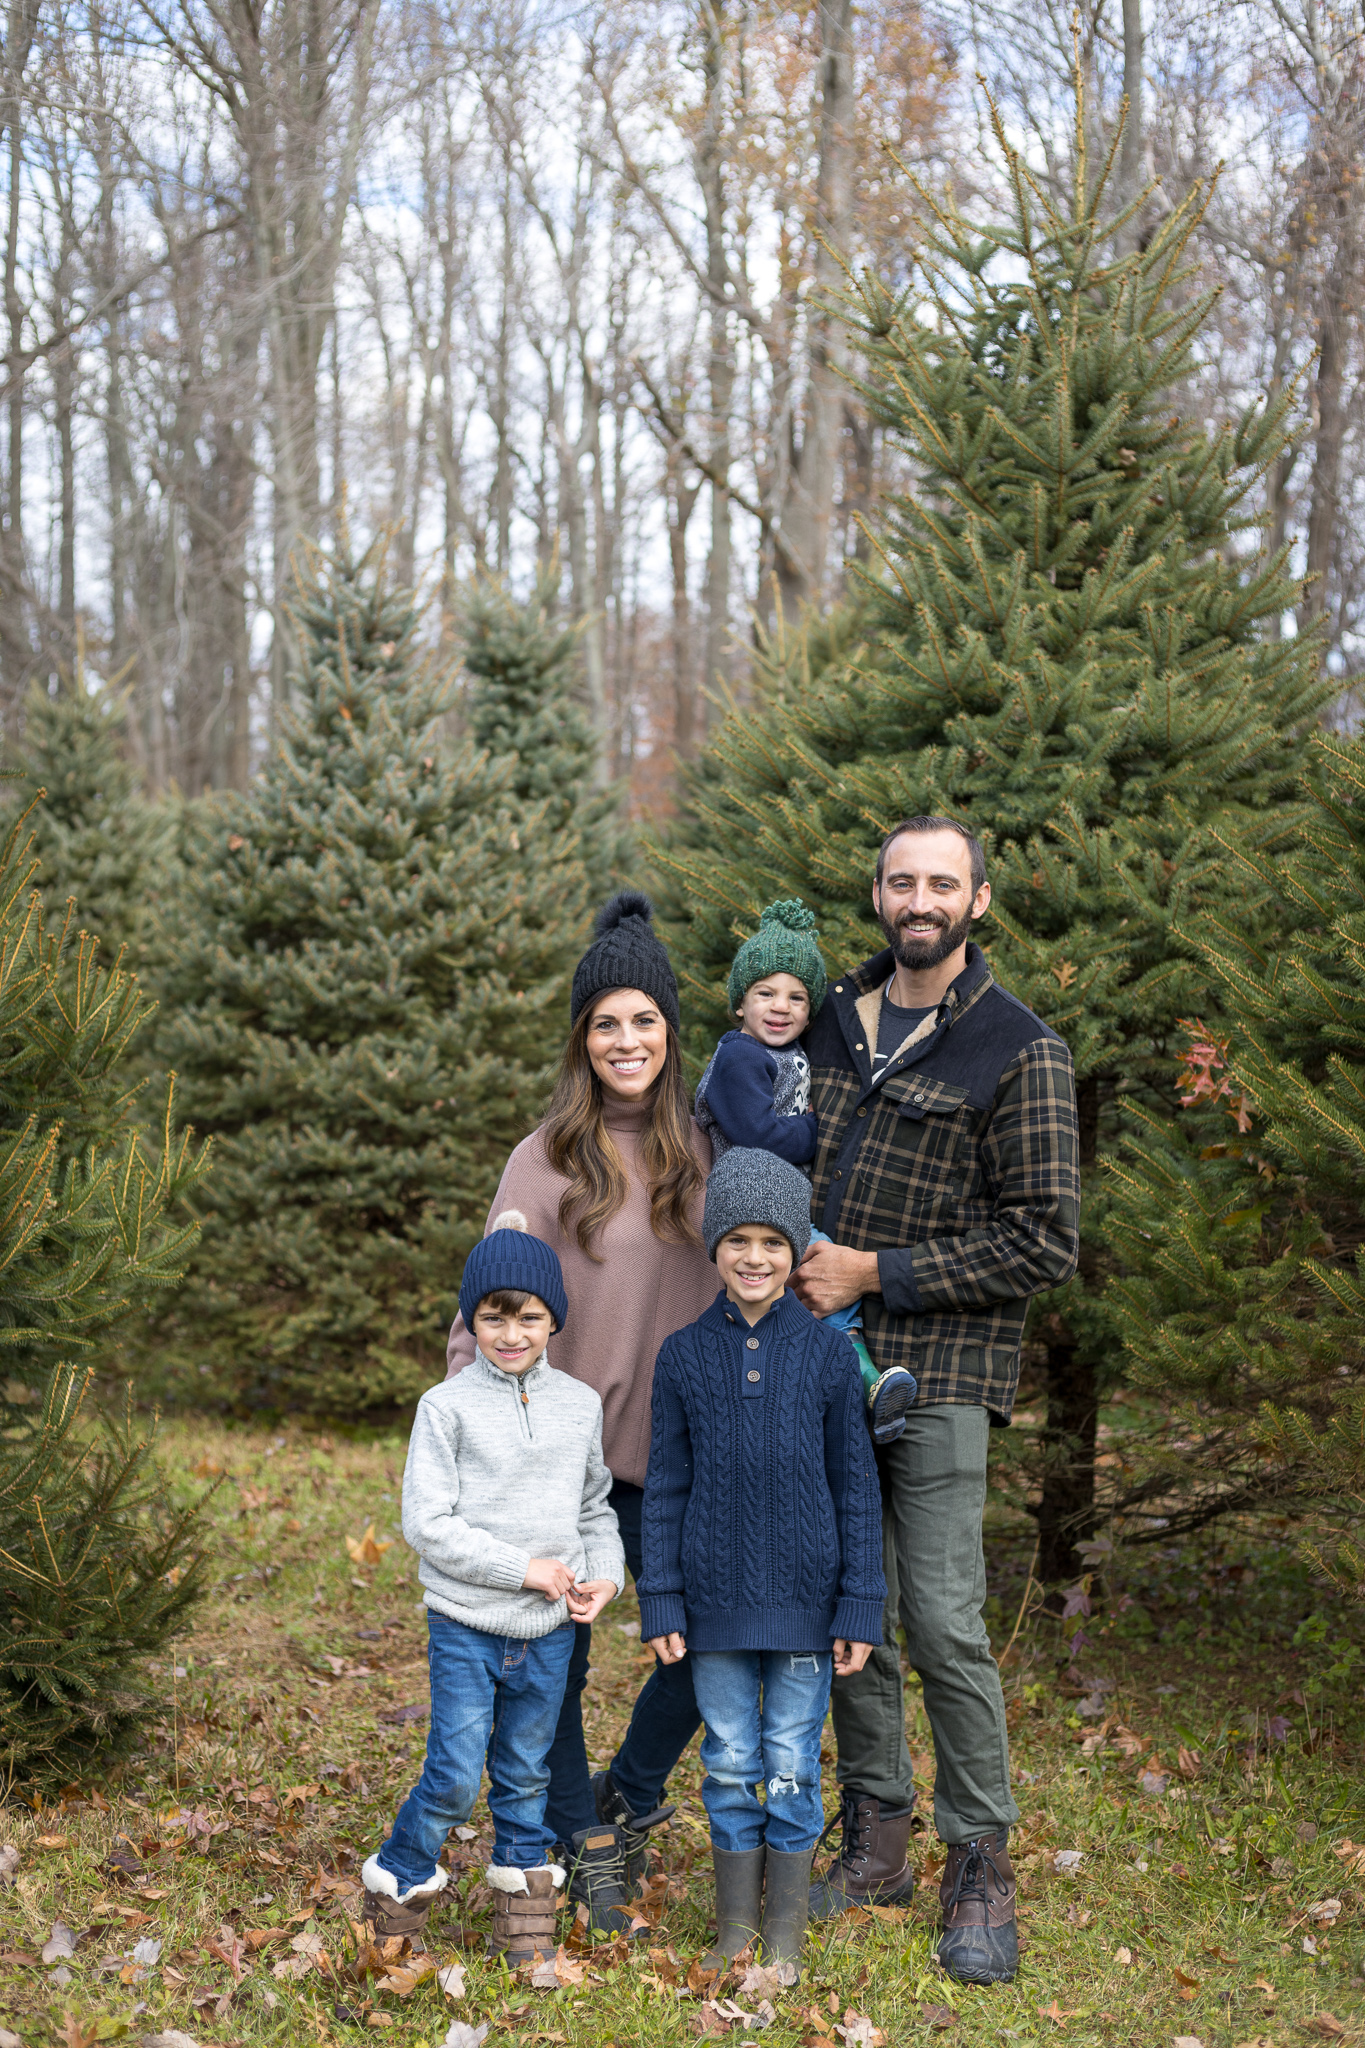 Family Christmas tree cutting